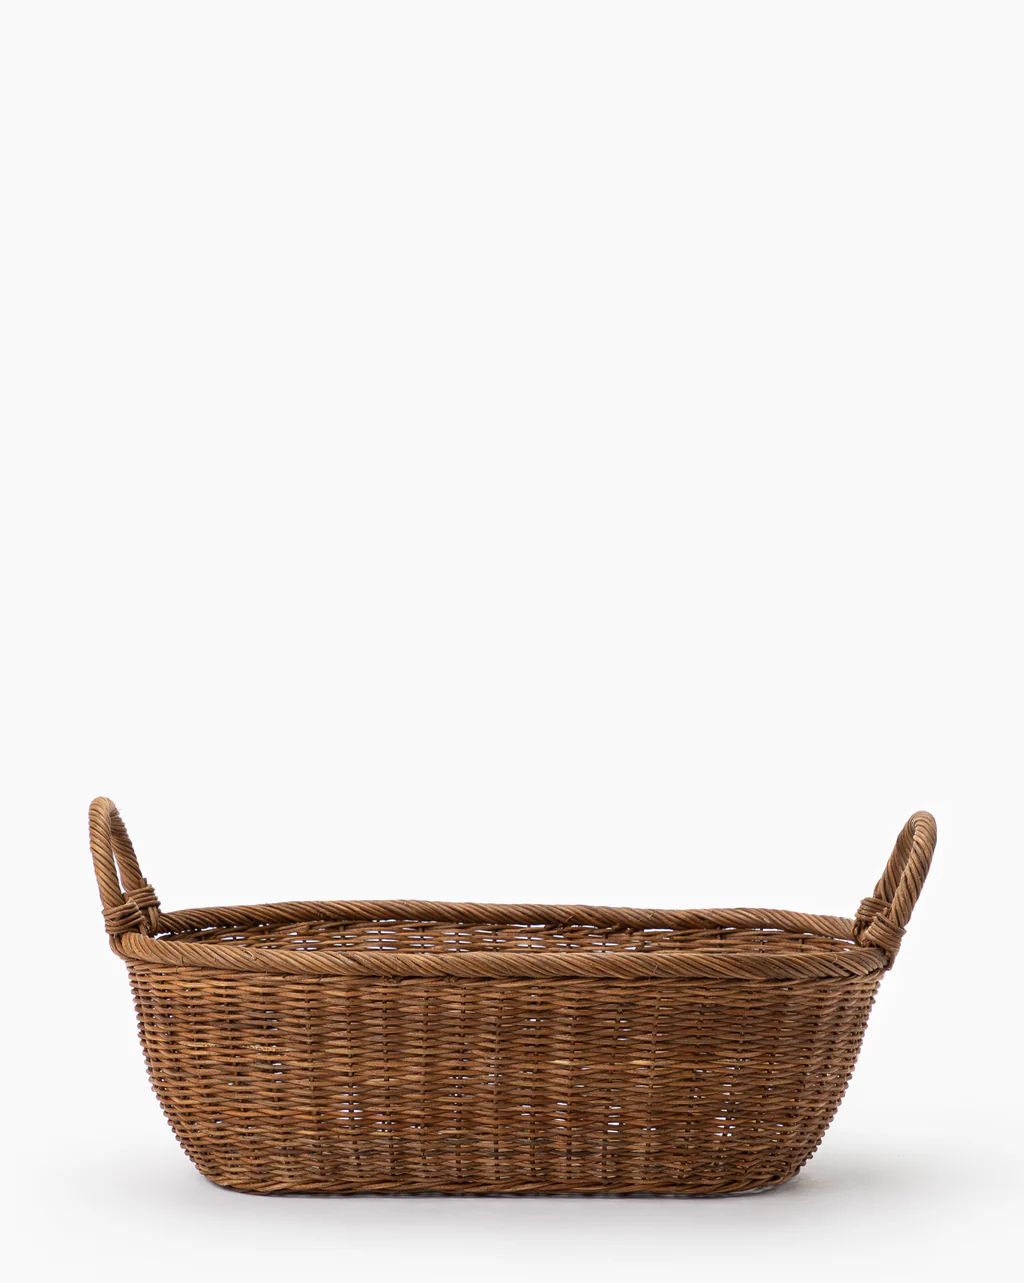 Wicker Handled Basket | McGee & Co.